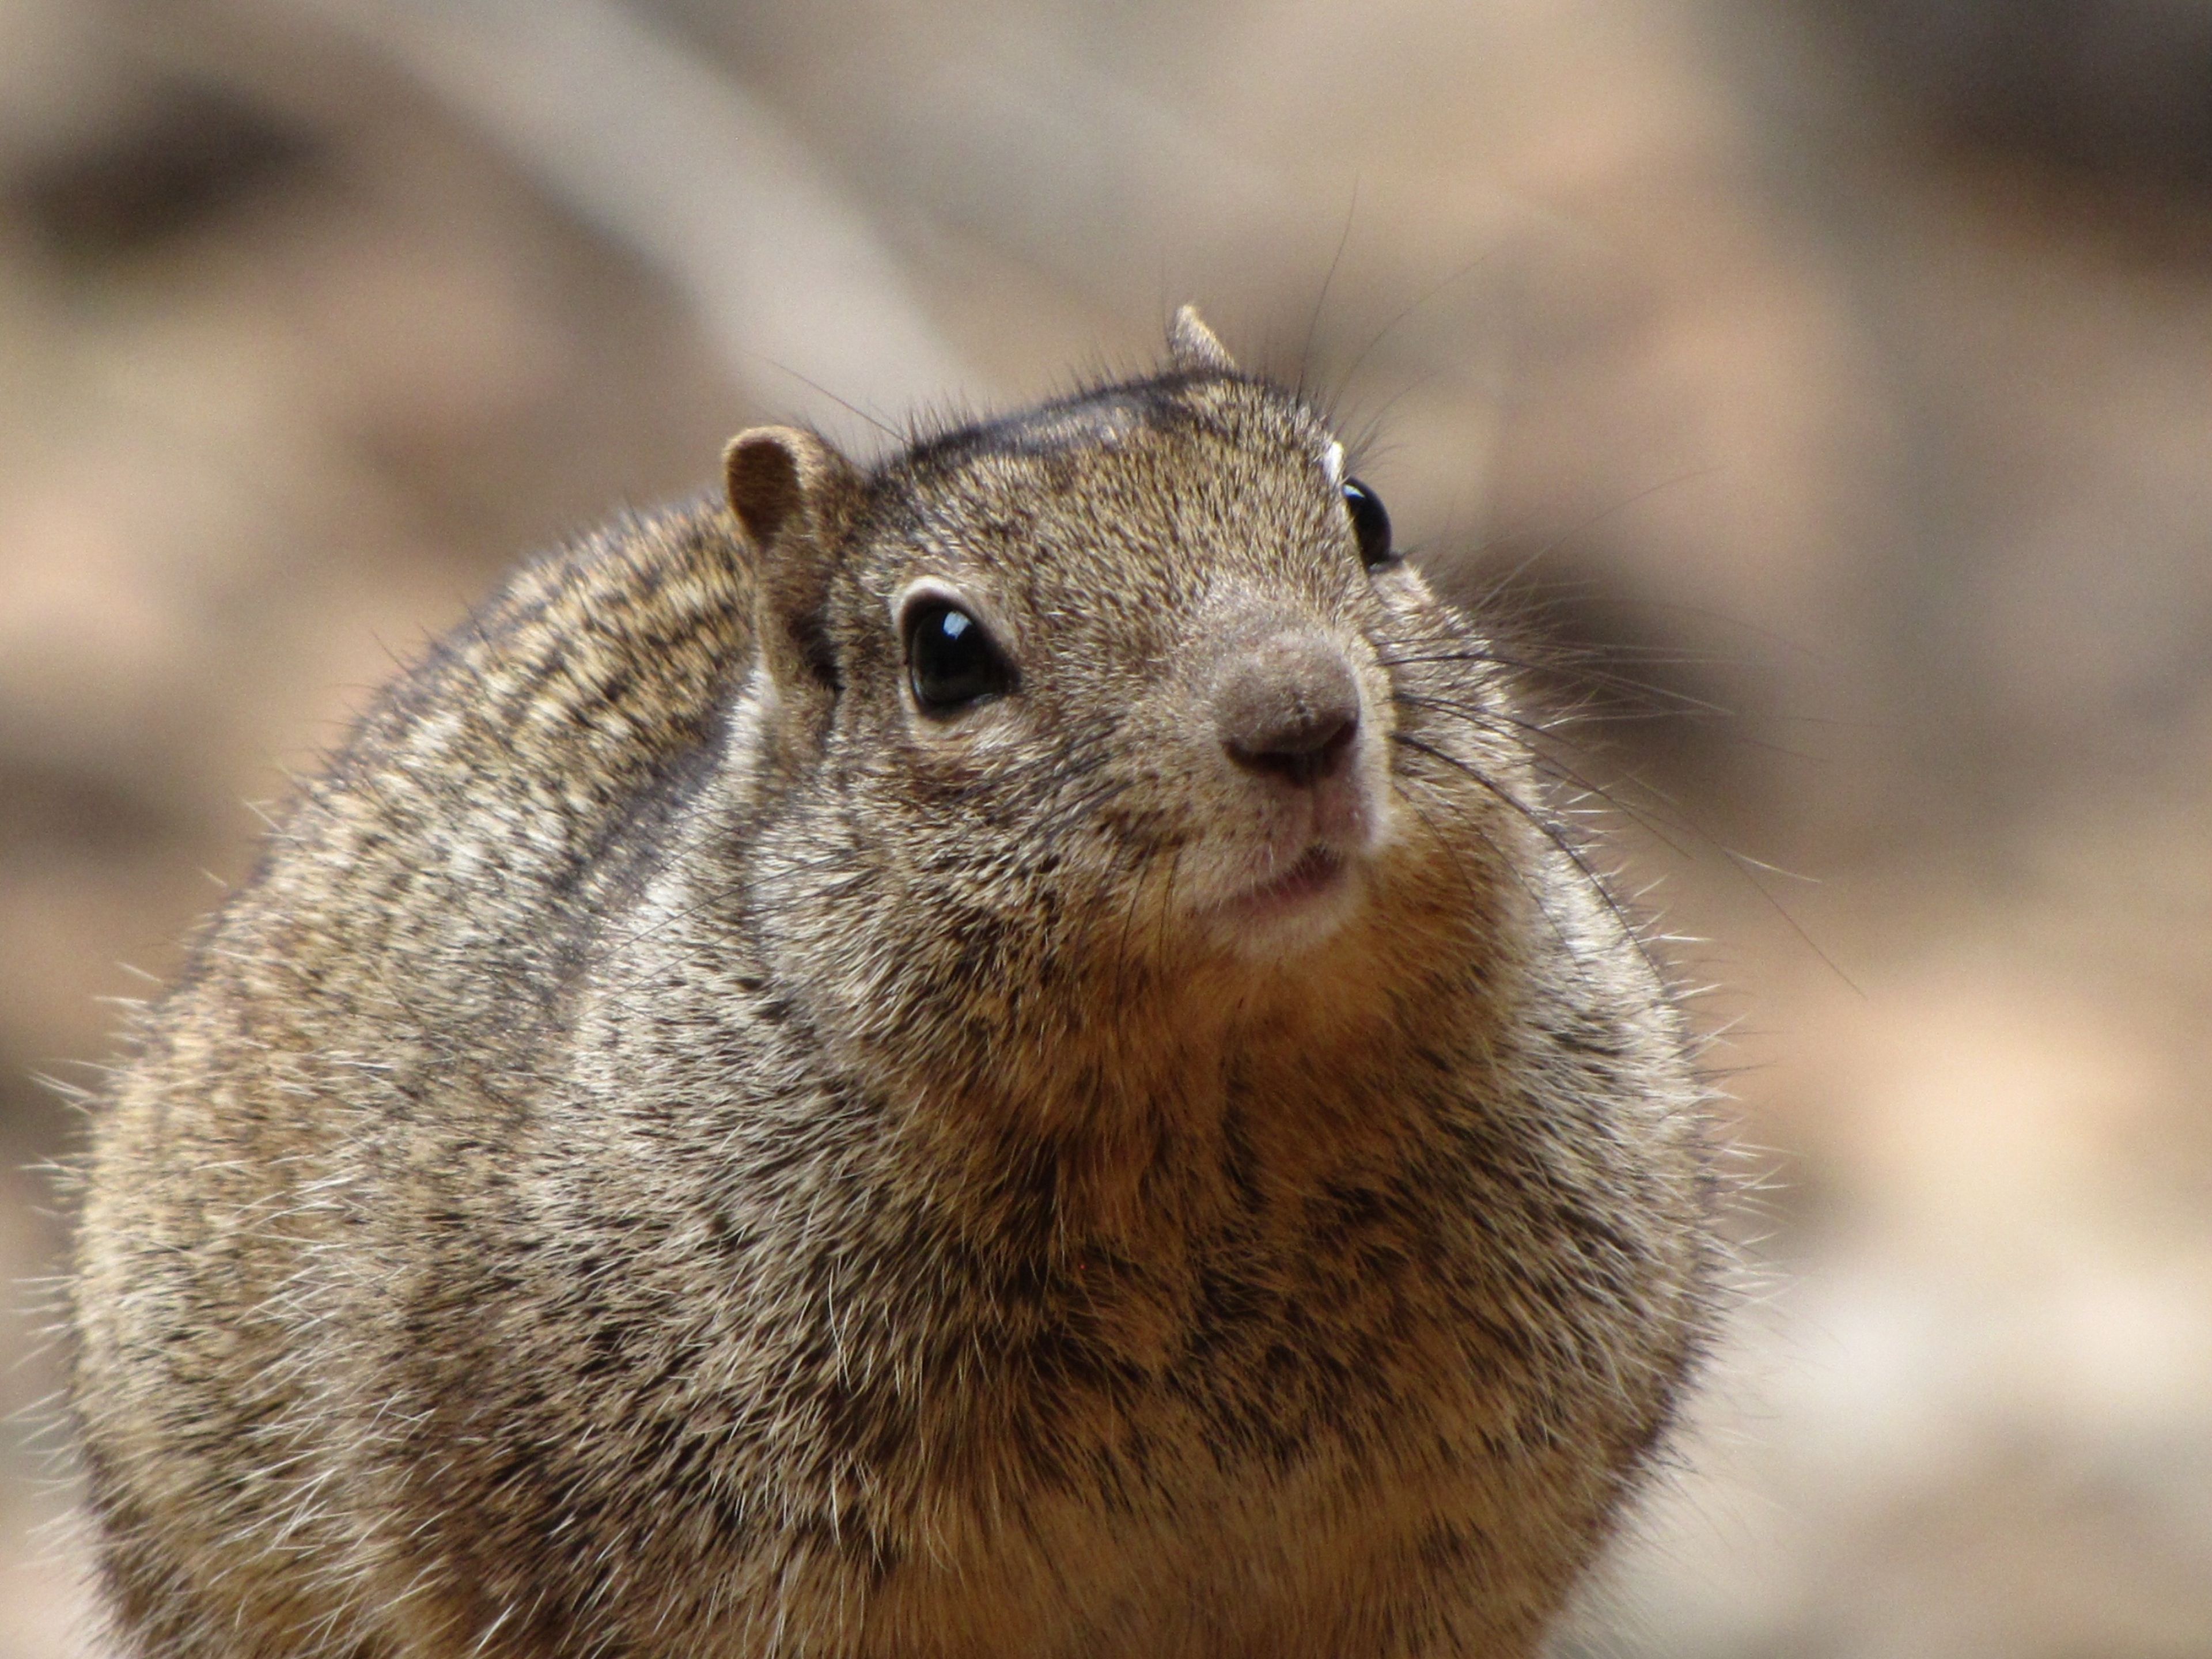 A portrait of a squirrel.